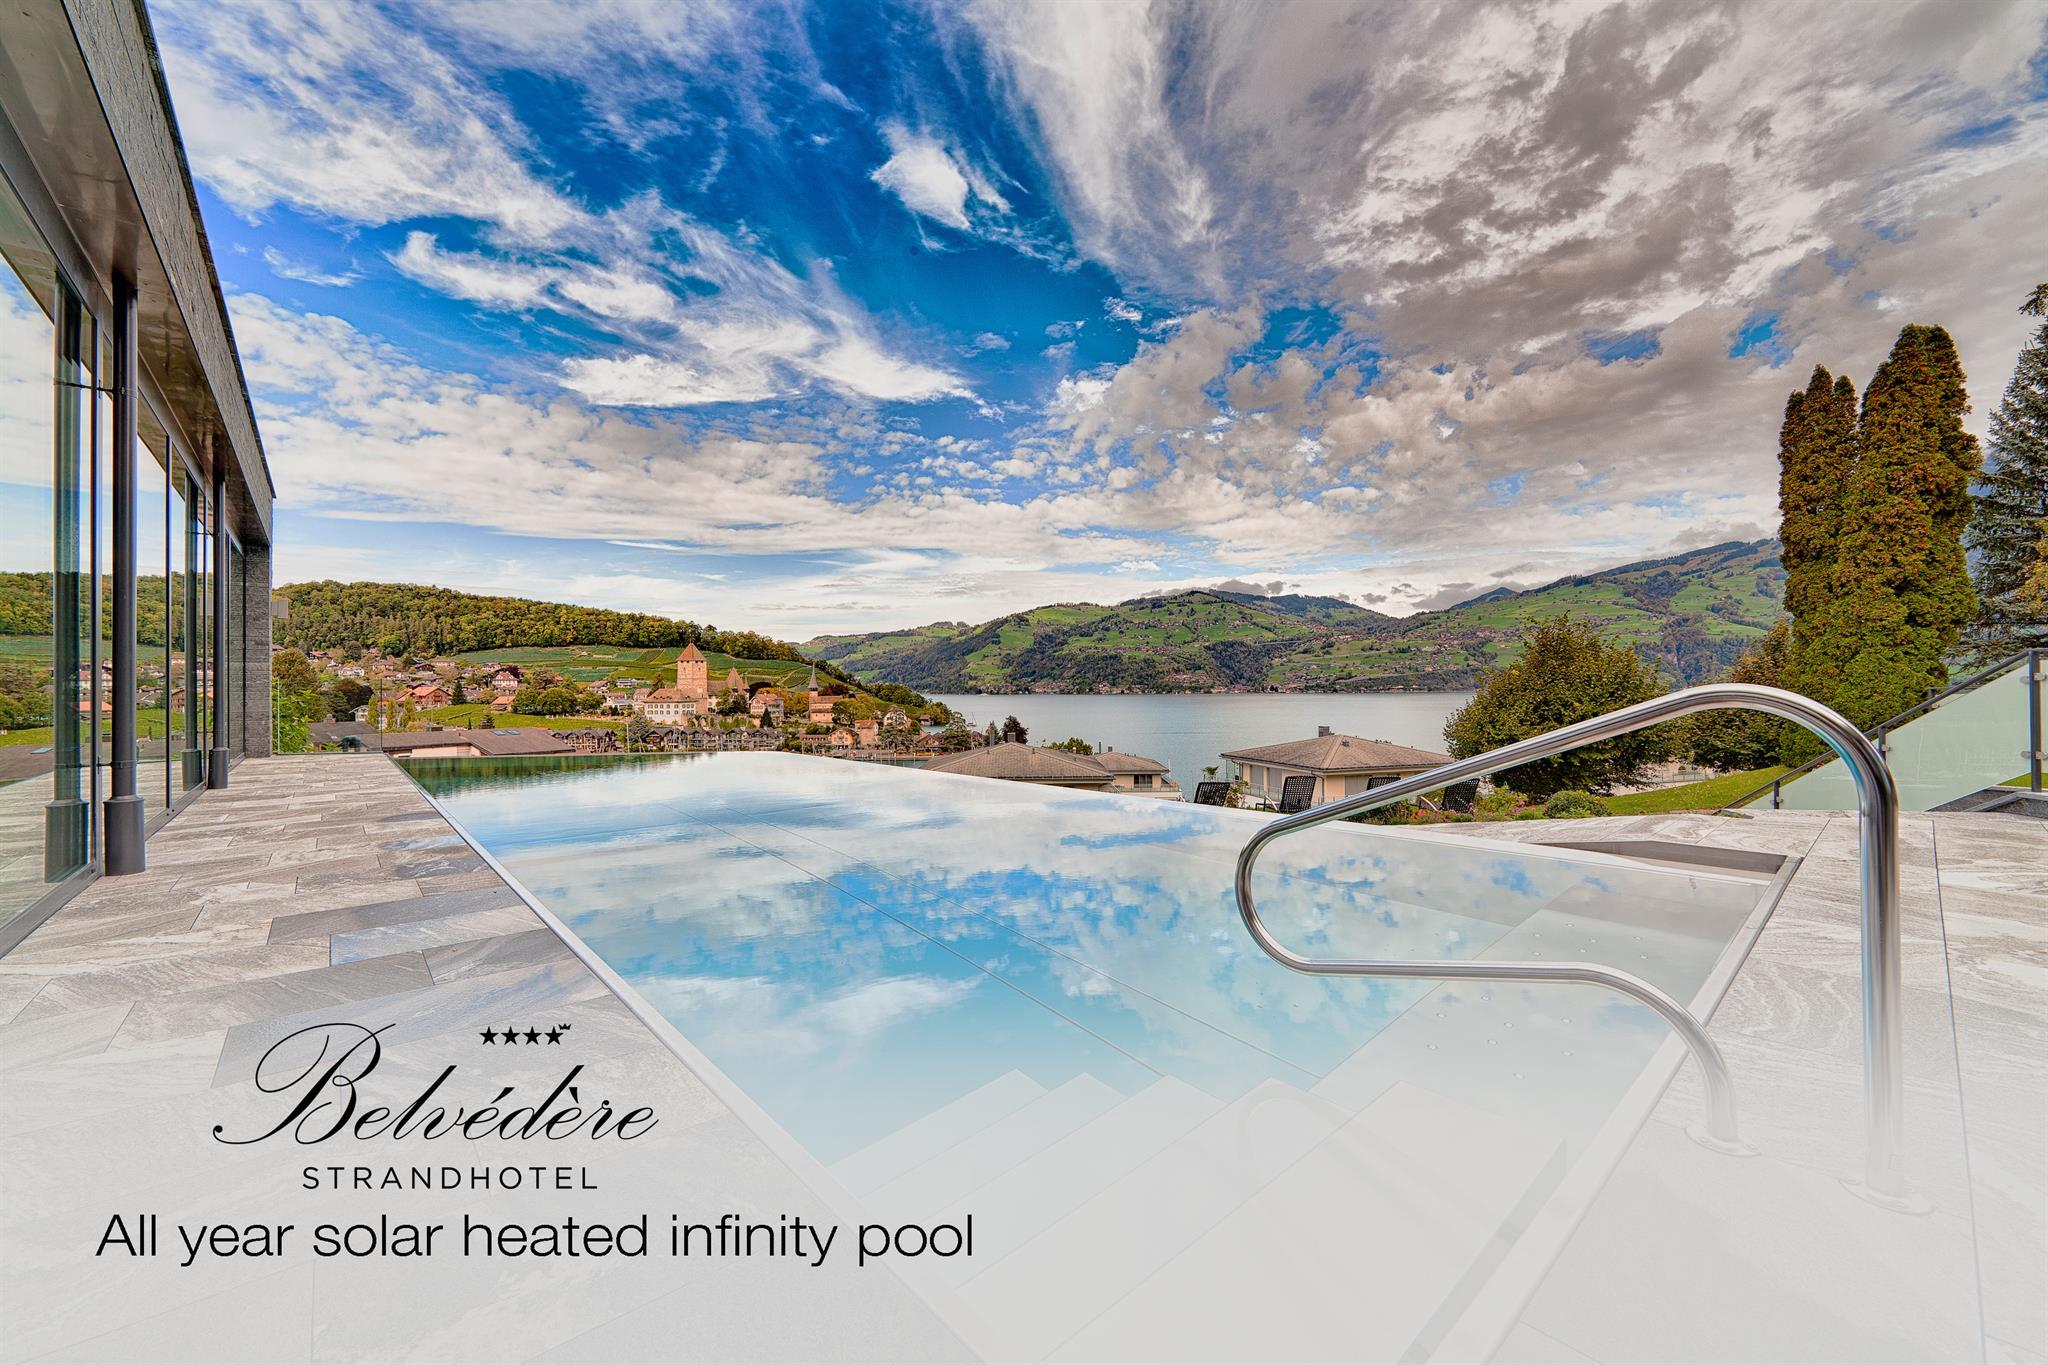 All year solar heated infinity pool